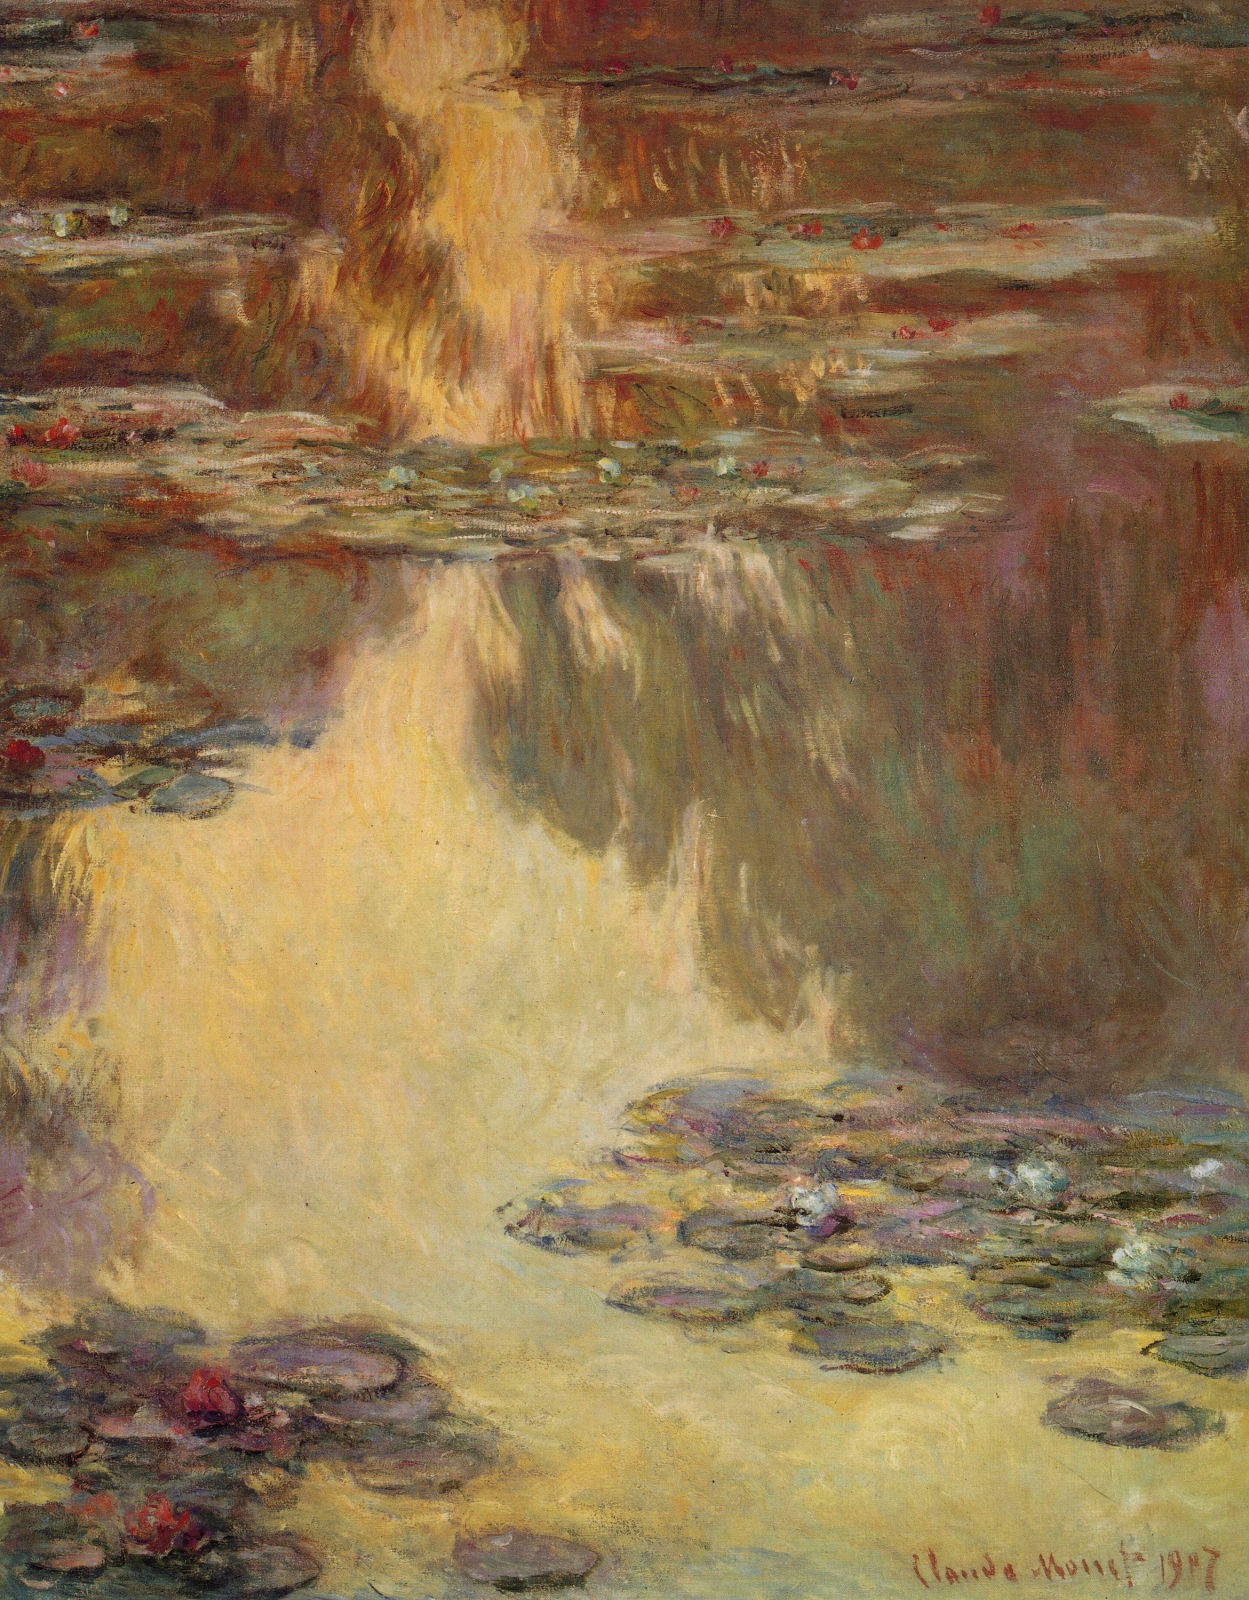 Claude+Monet-1840-1926 (956).jpg